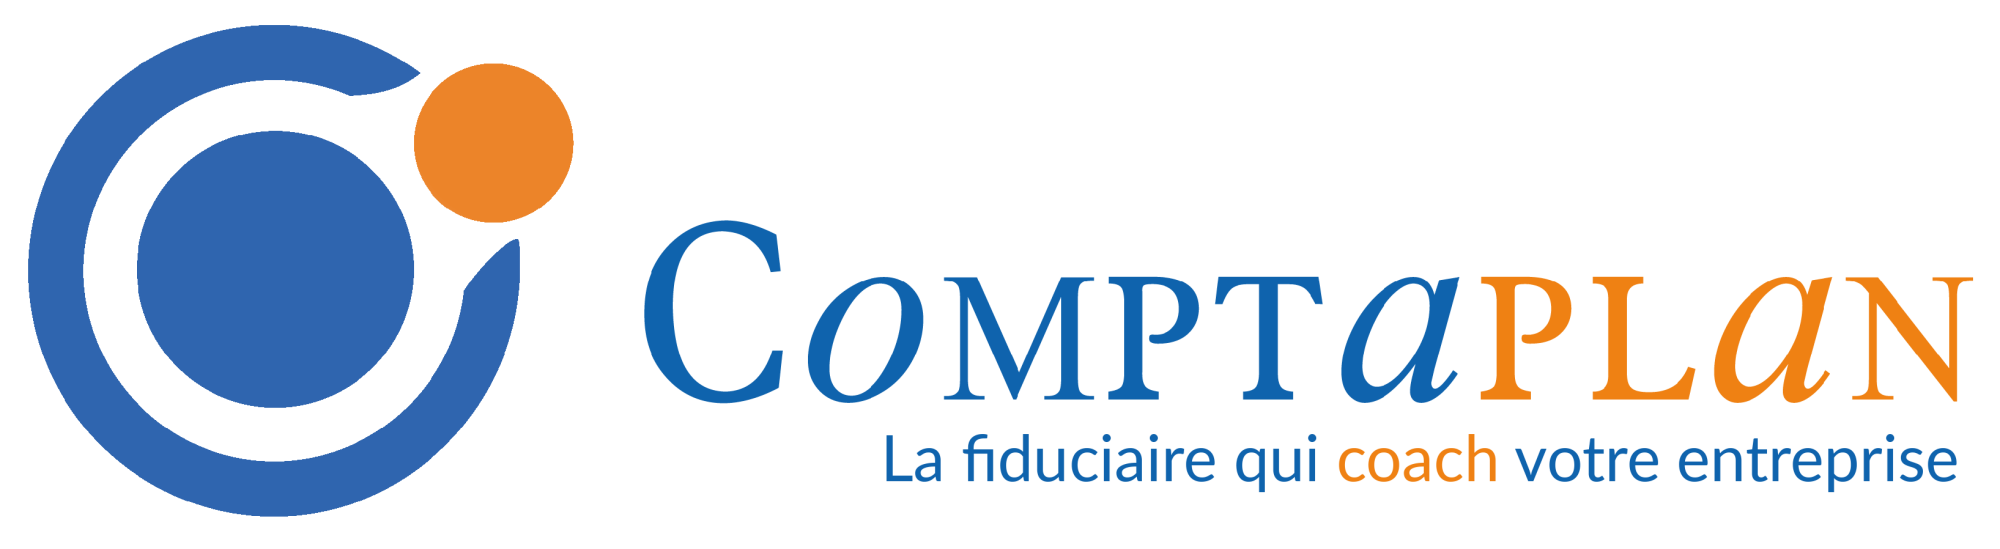 Logo Complet+slogan